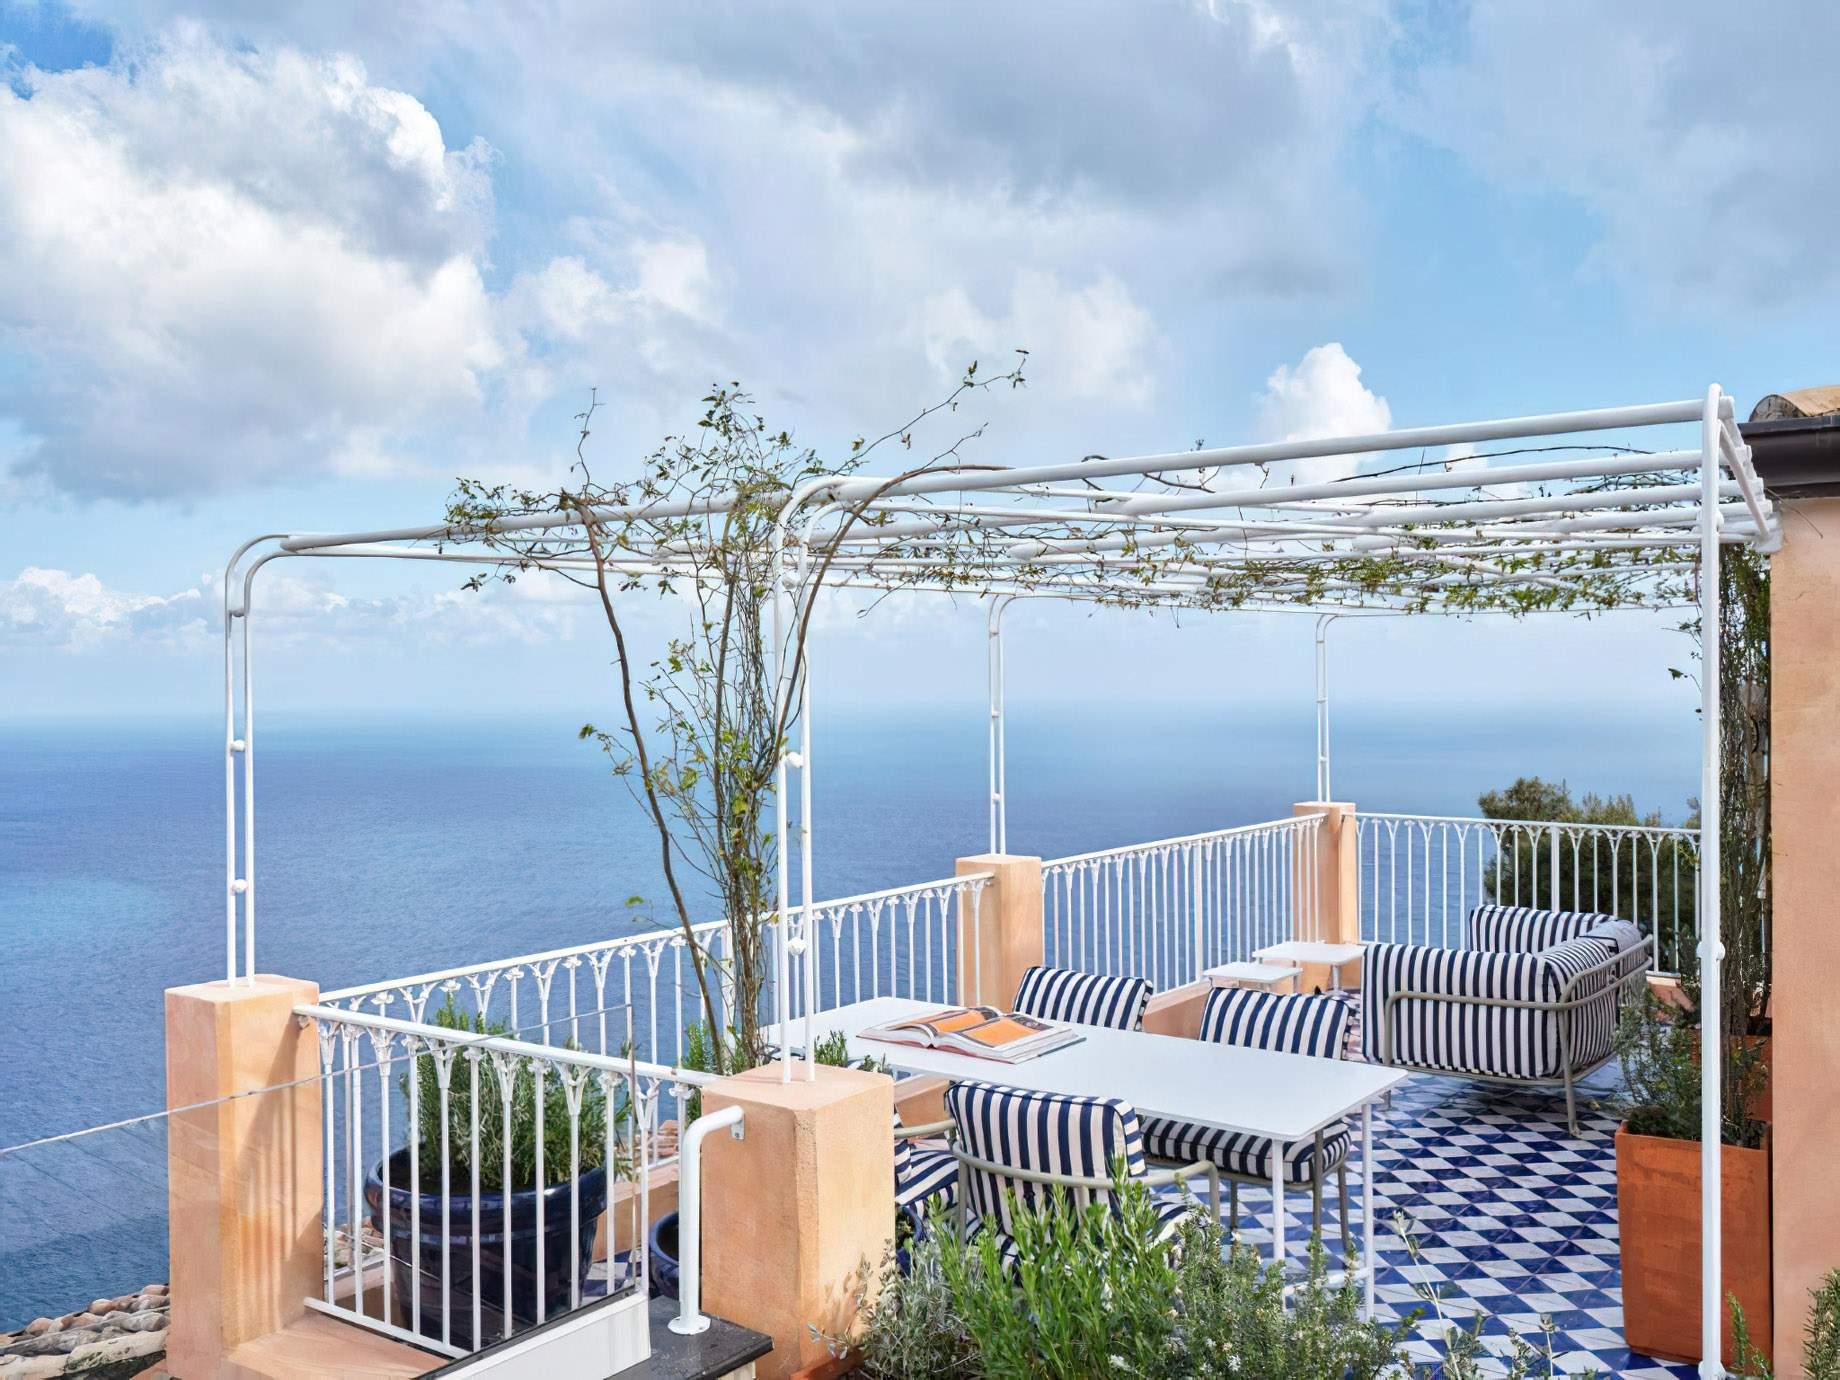 Palazzo Avino Hotel - Amalfi Coast, Ravello, Italy - Guest Suite Terrace